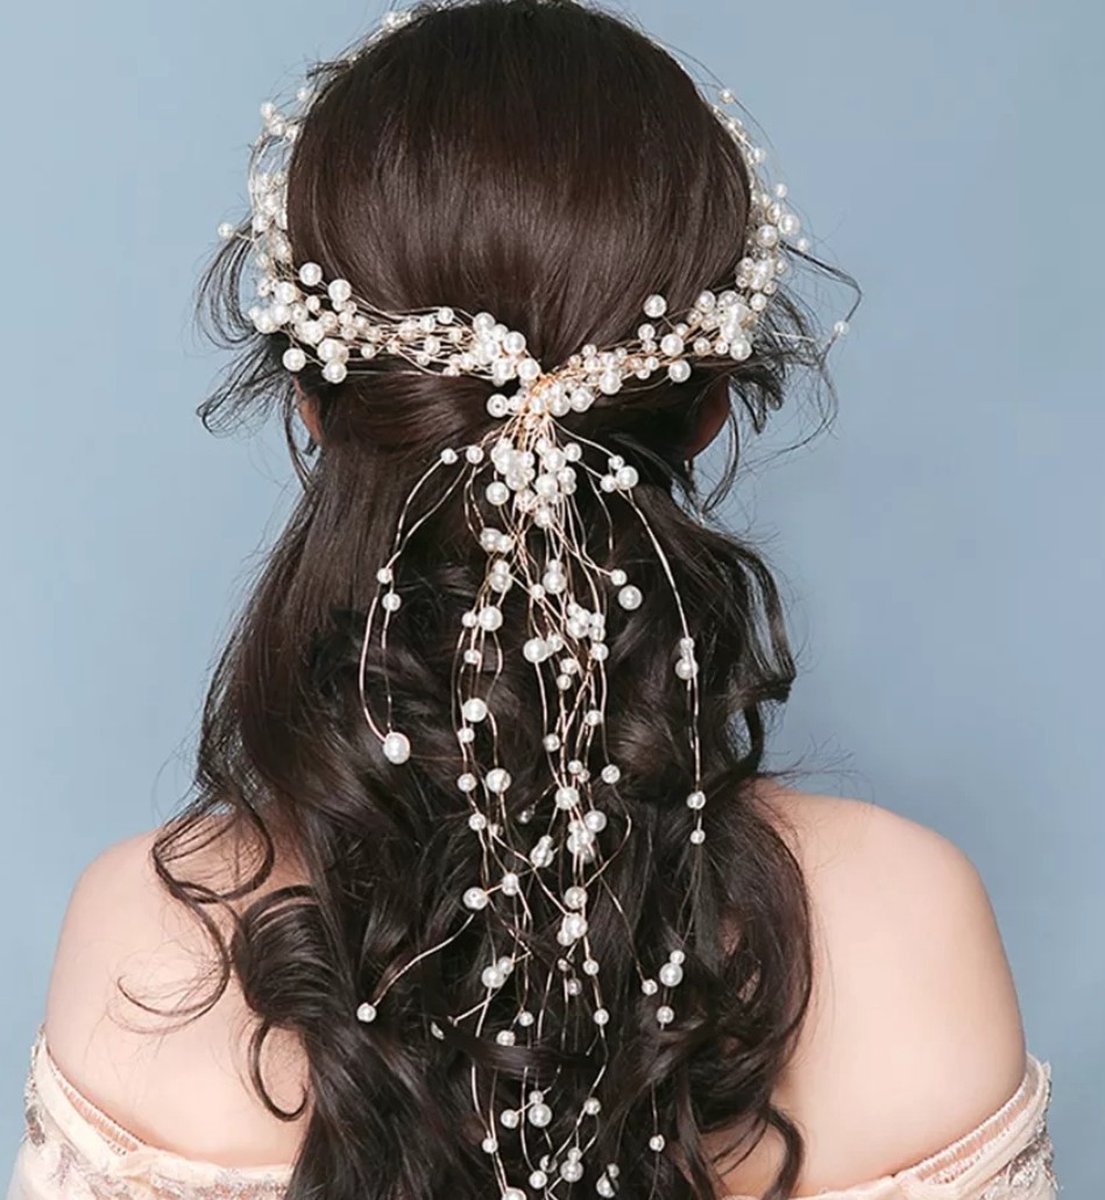 Lana - Parel krans goud - haarversiering - haarketting - haaraccessoires voor feest / bruiloft / verloving - Merkloos